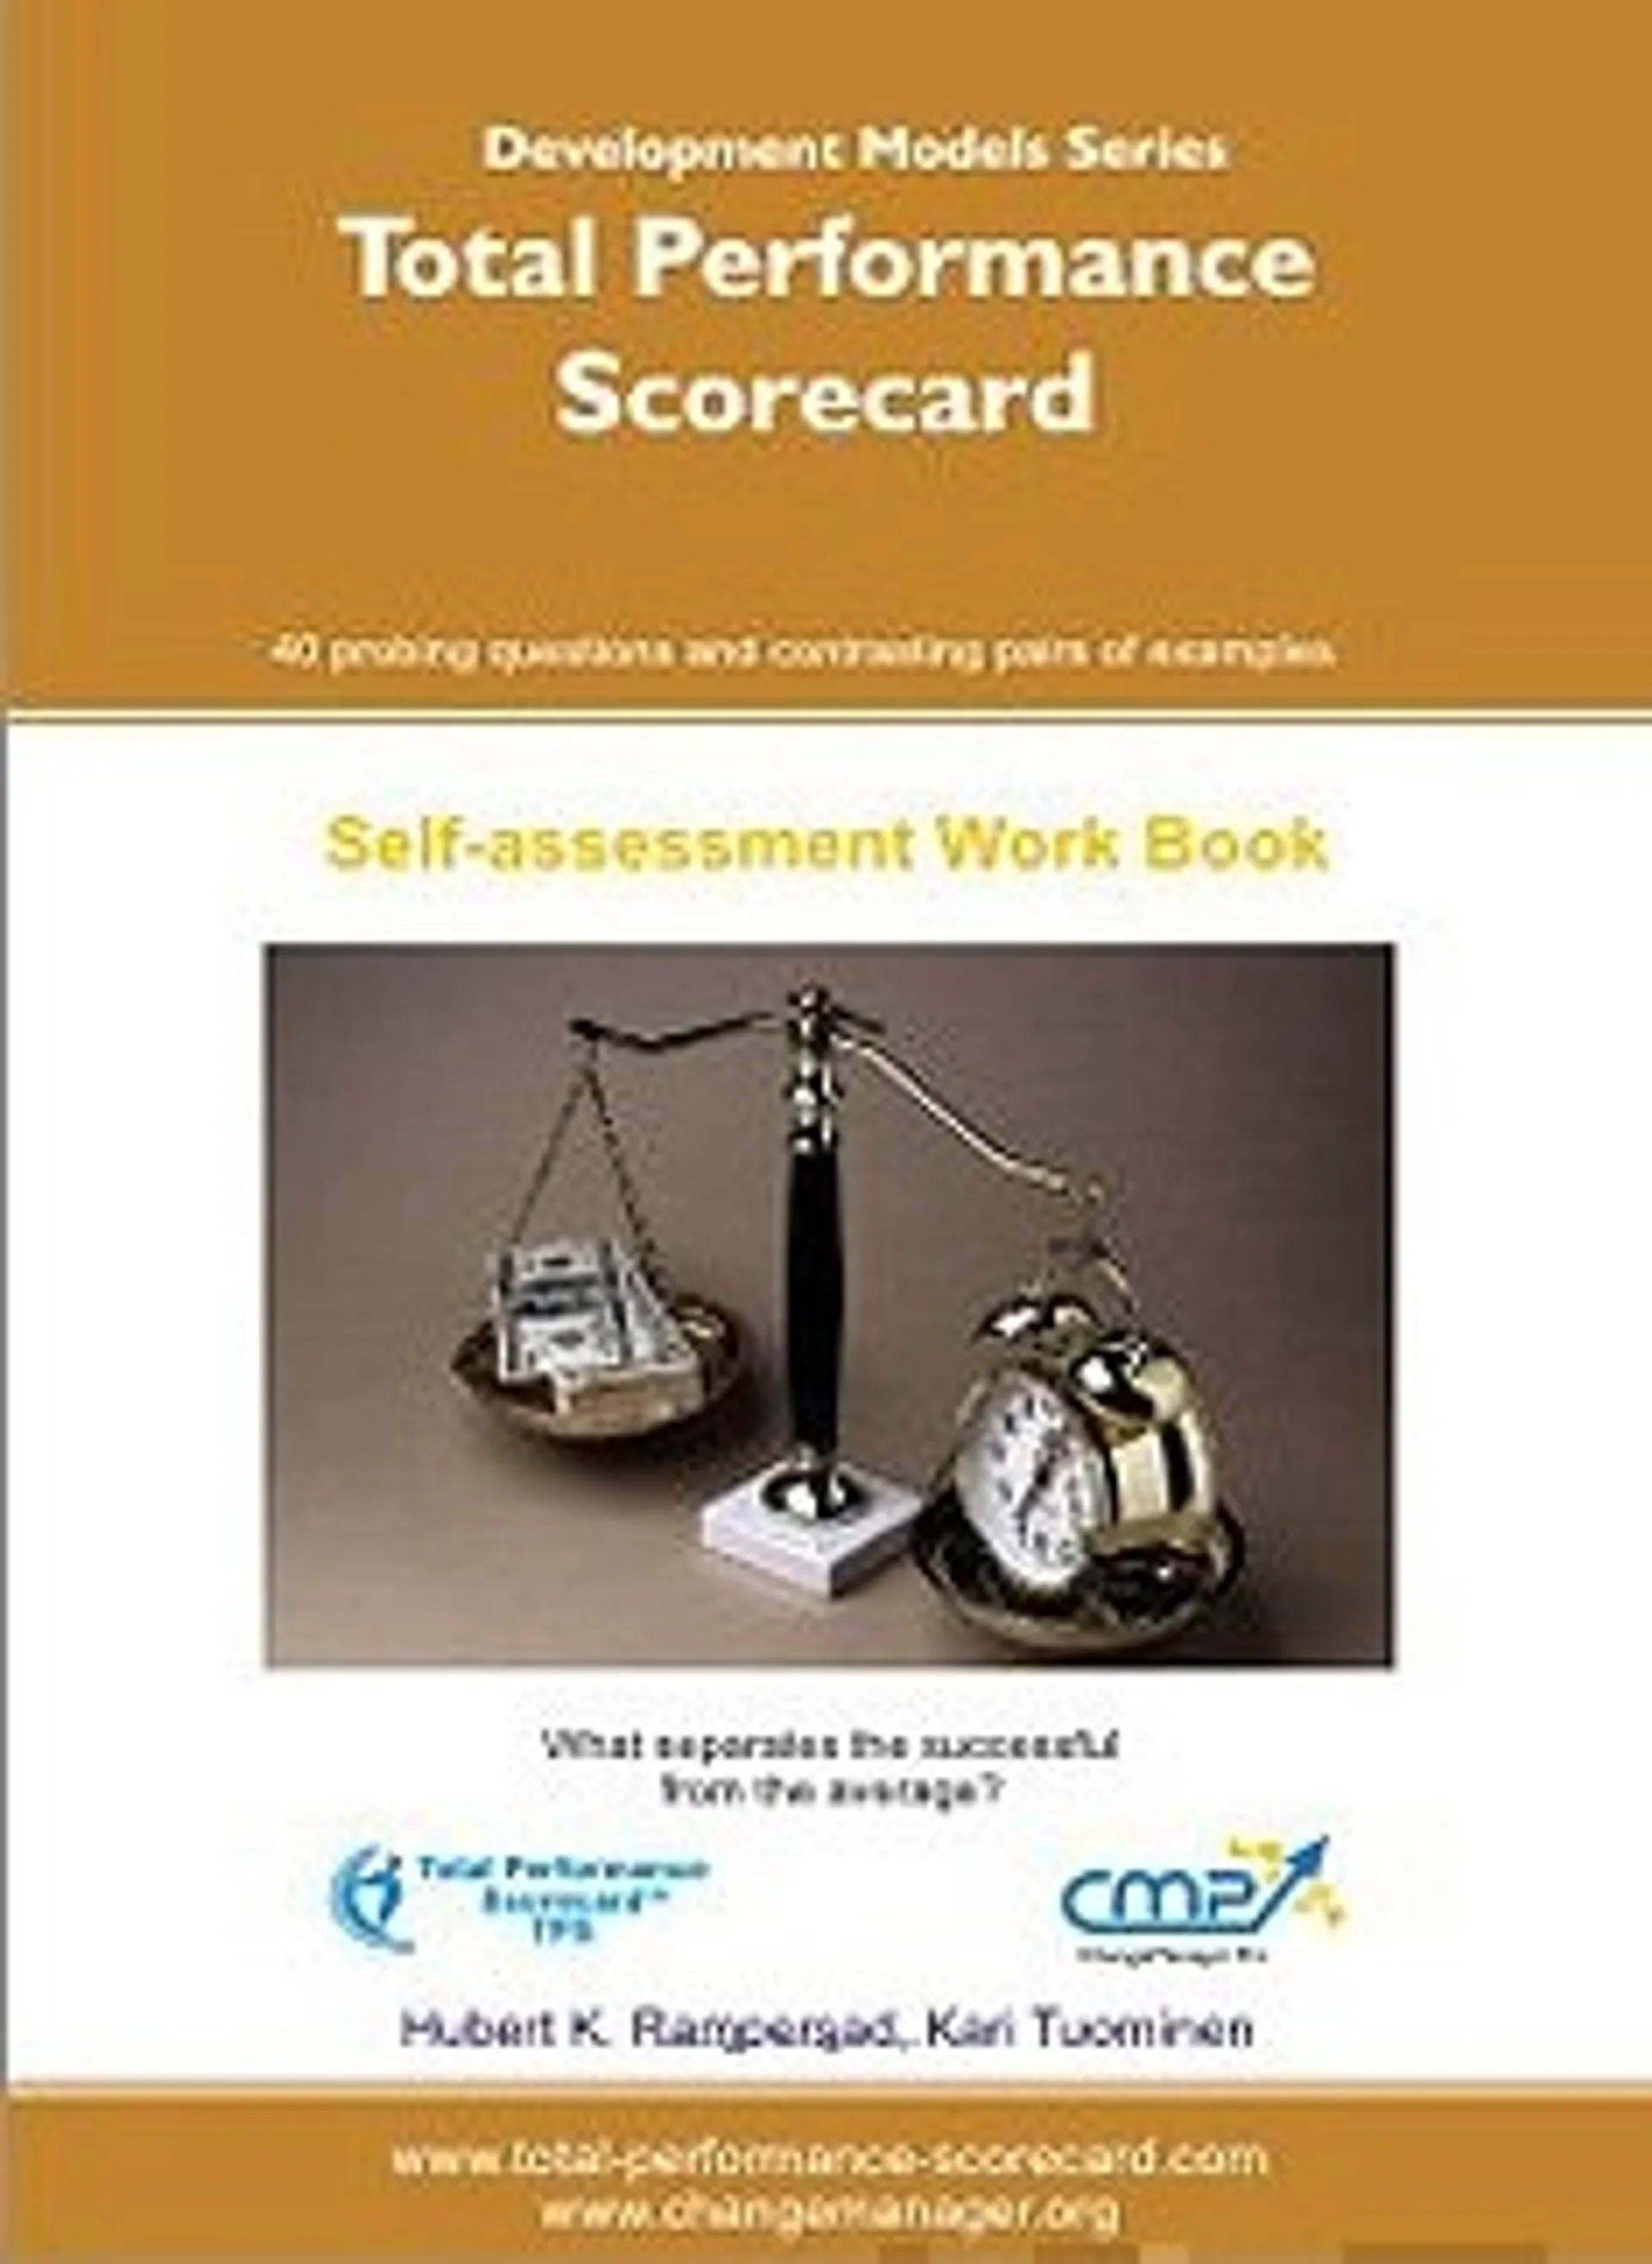 Total performance scorecard - EFQM 2010